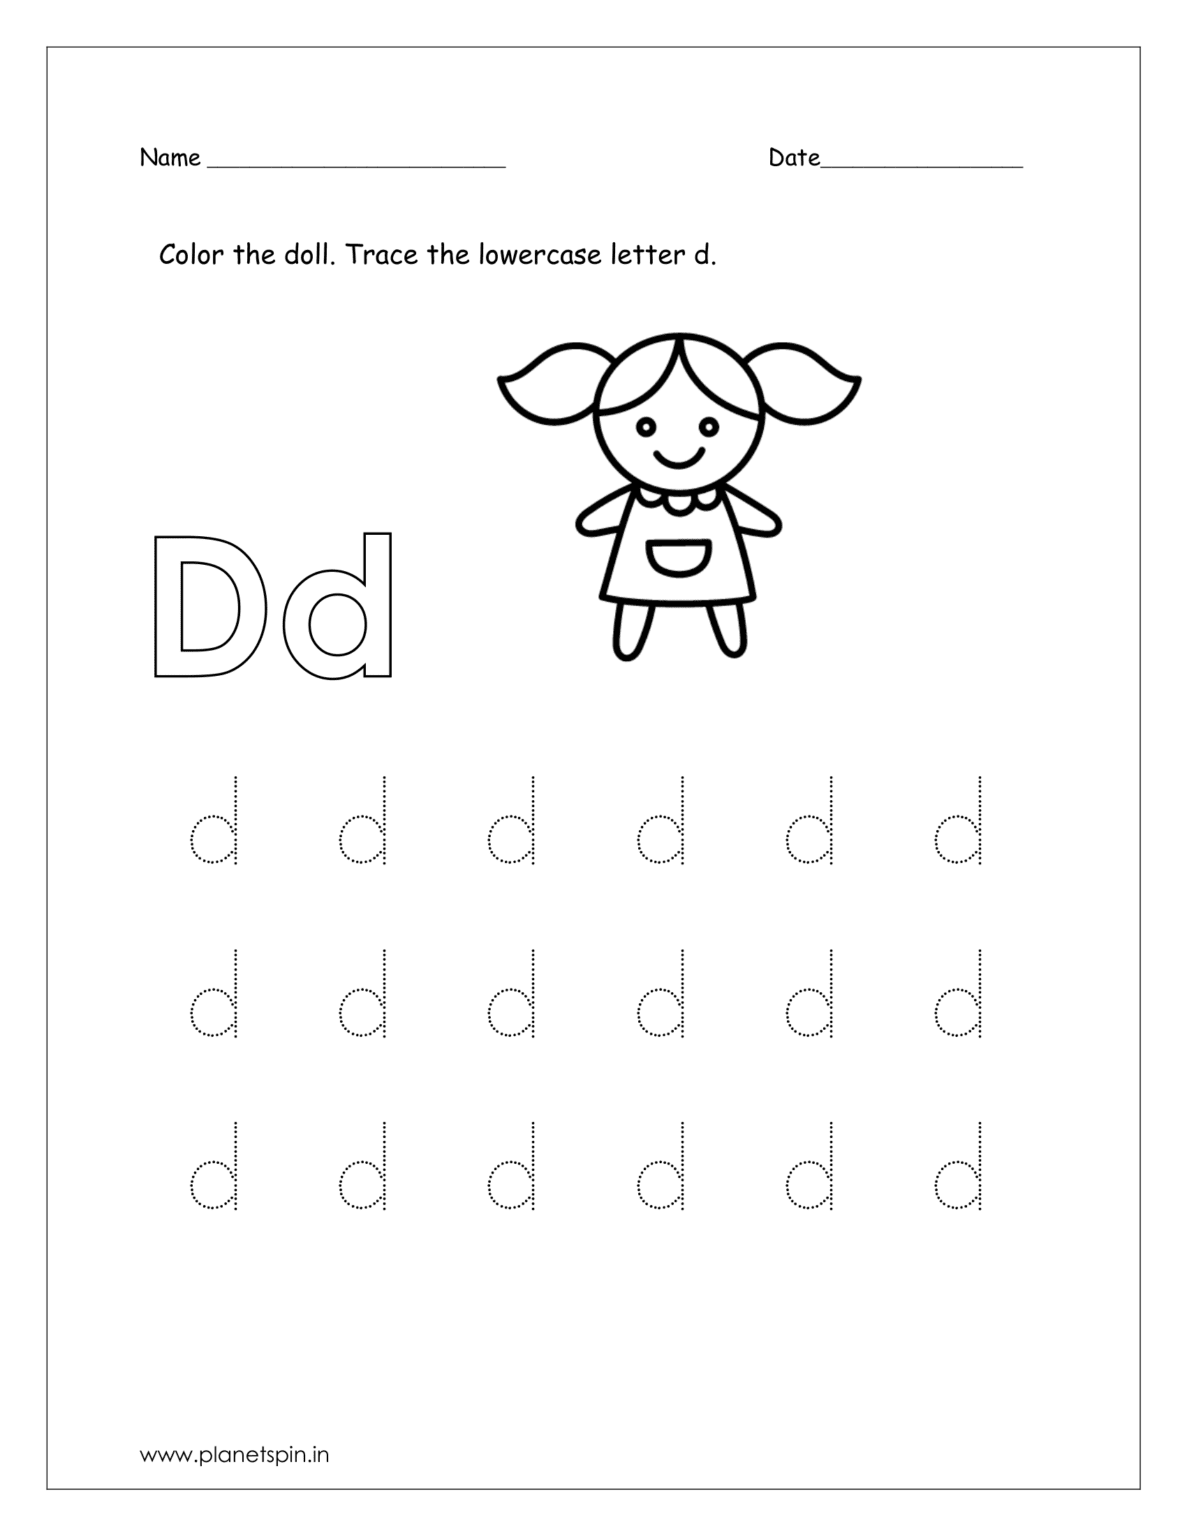 Worksheet for the letter d for kindergarten | Planetspin.in